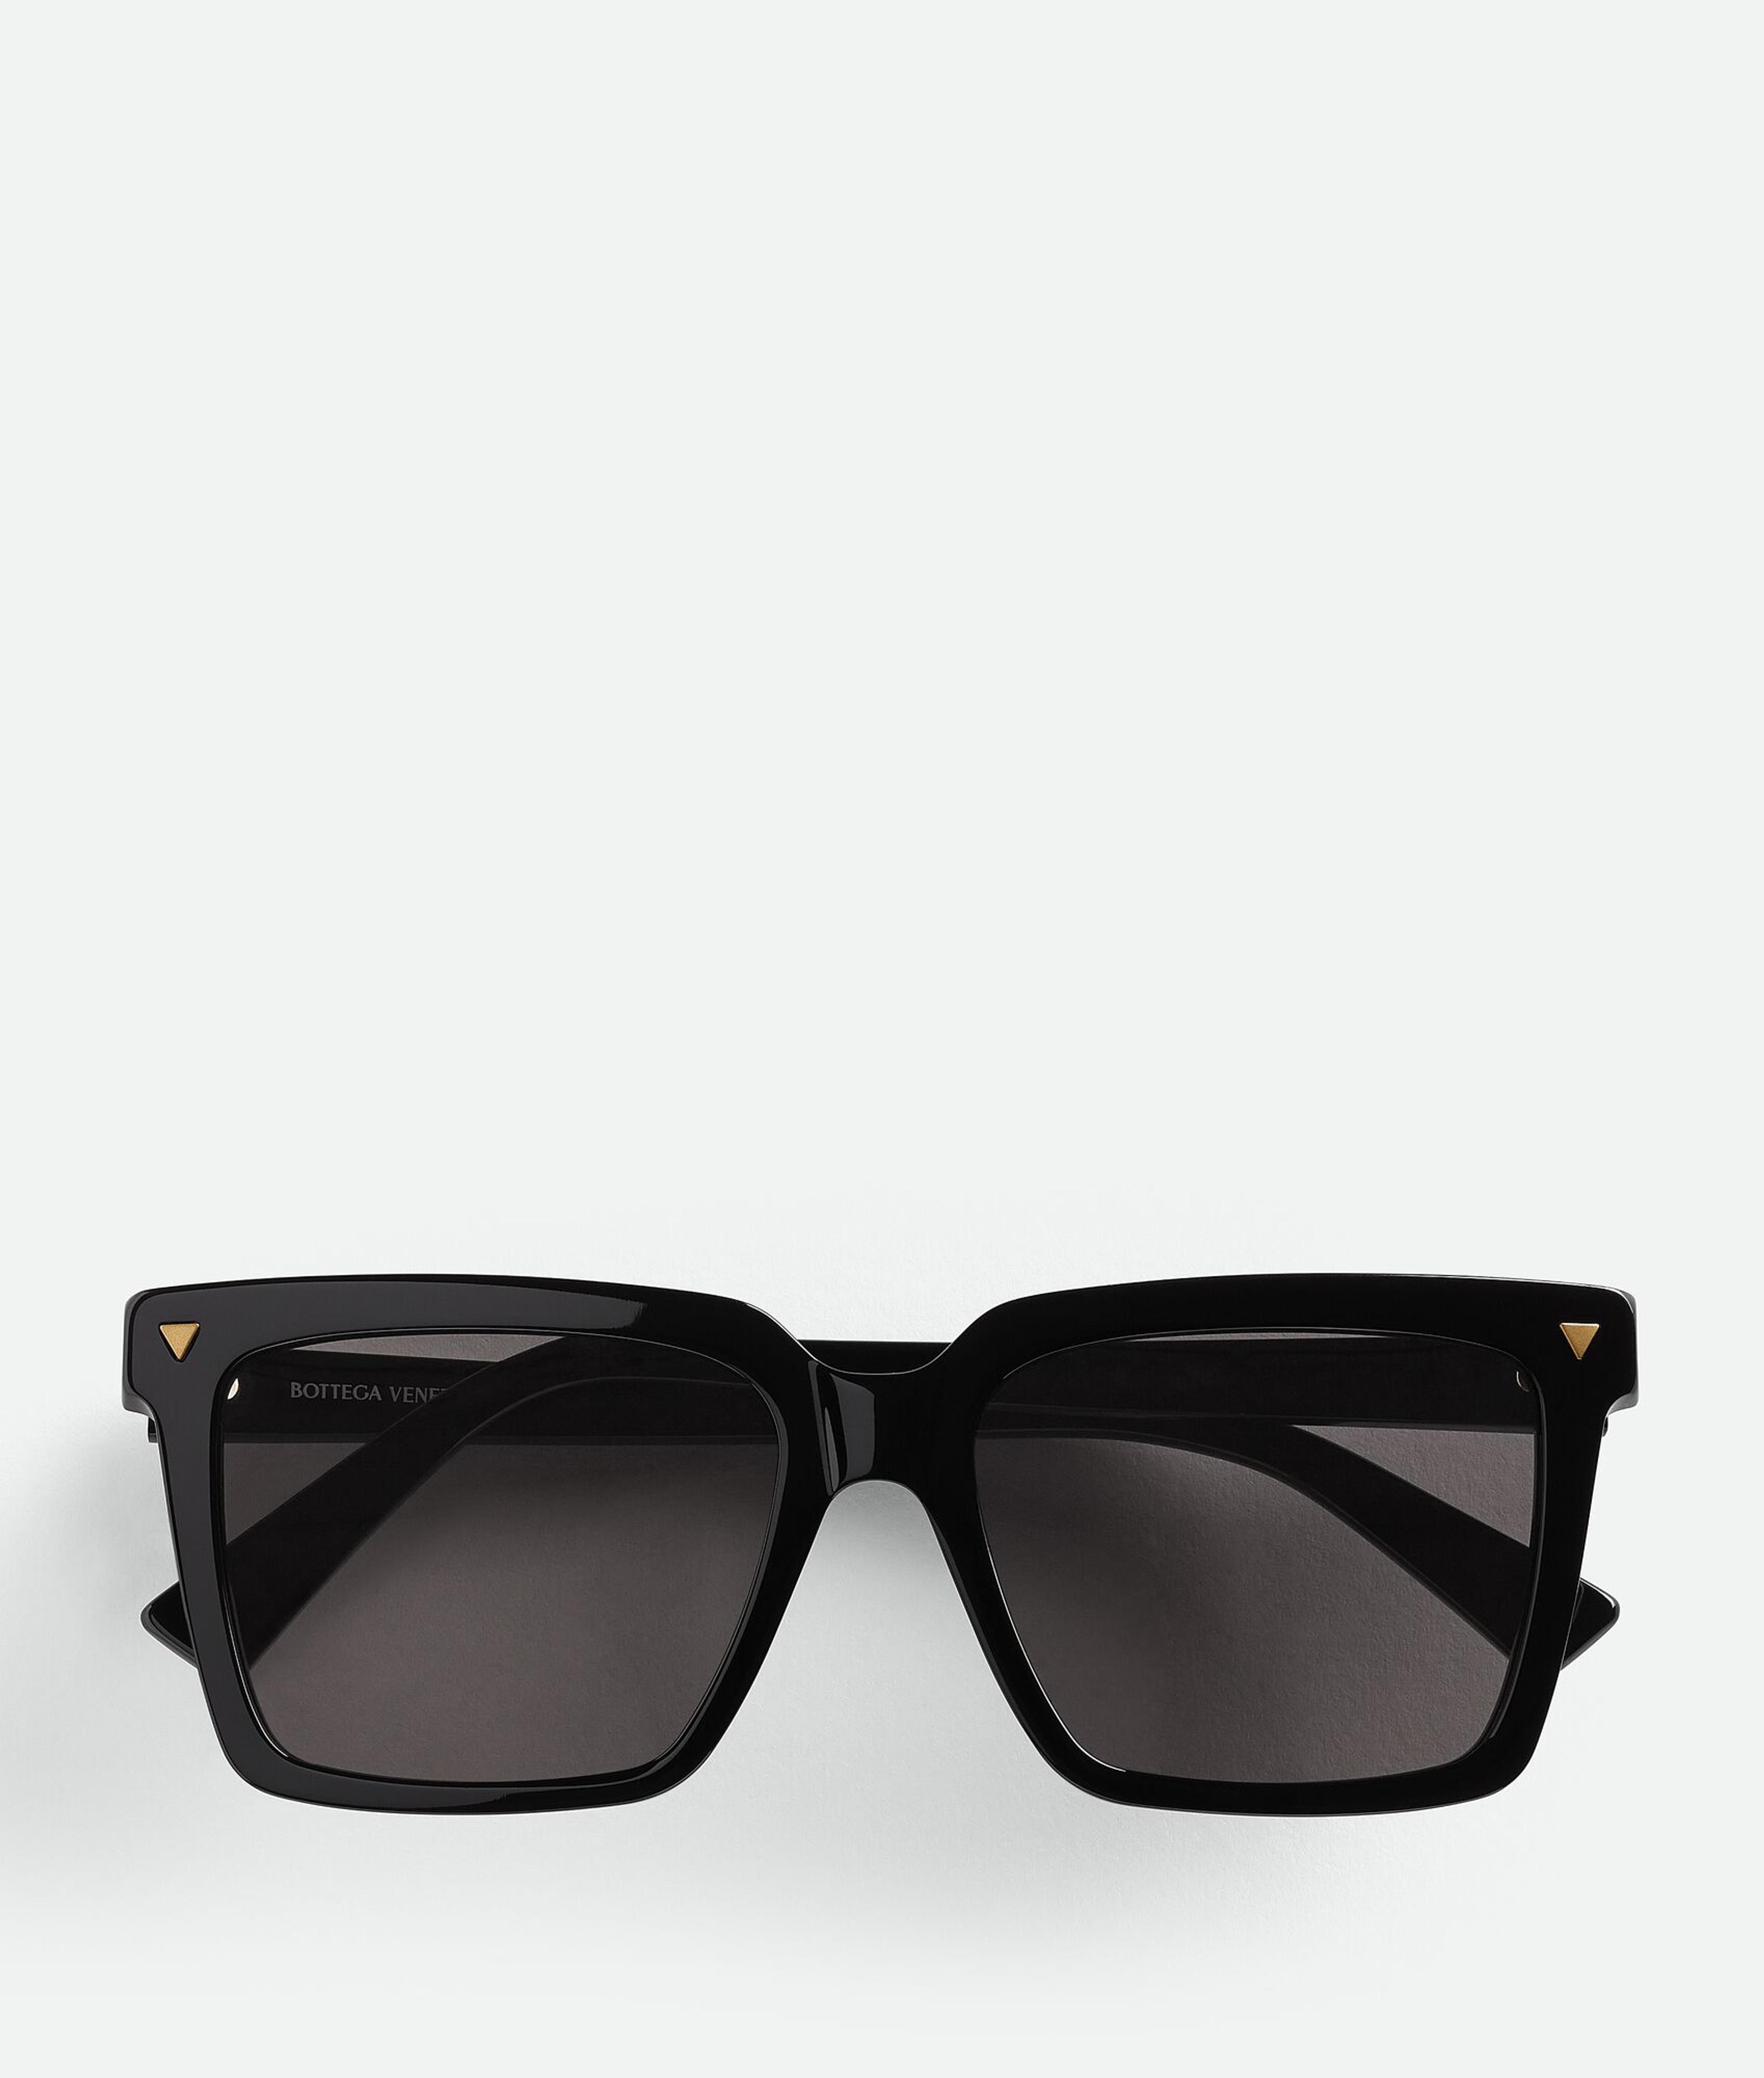 Bottega Veneta® Women's Soft Recycled Acetate Square Sunglasses in Black / Grey. Shop online now.